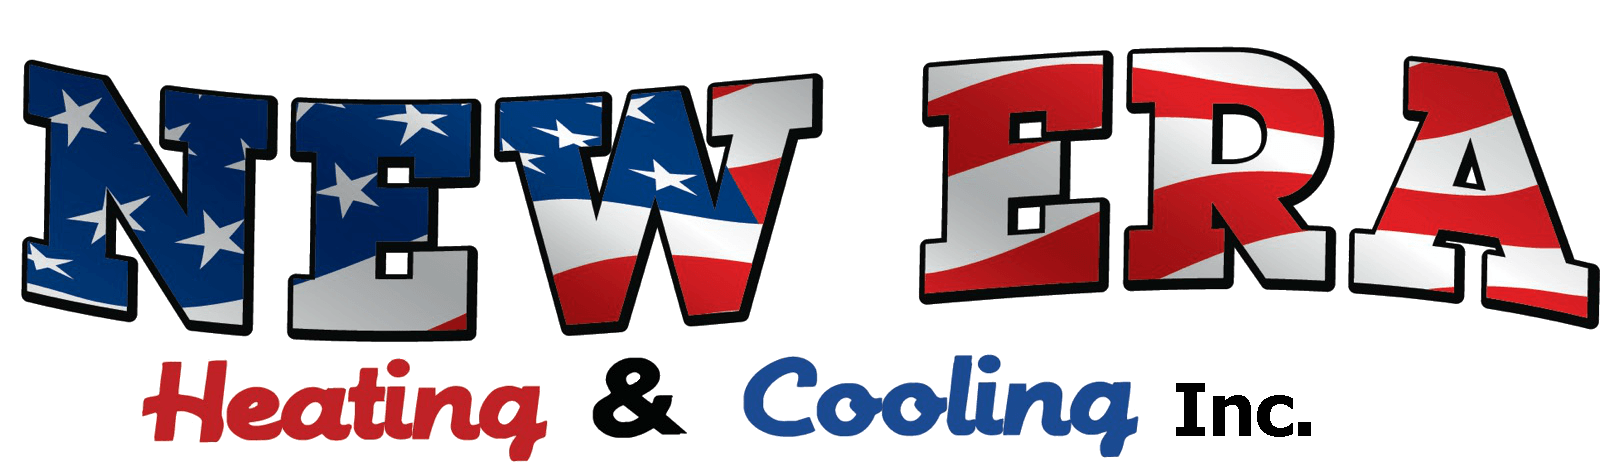 New Era Heating & Cooling Inc. logo